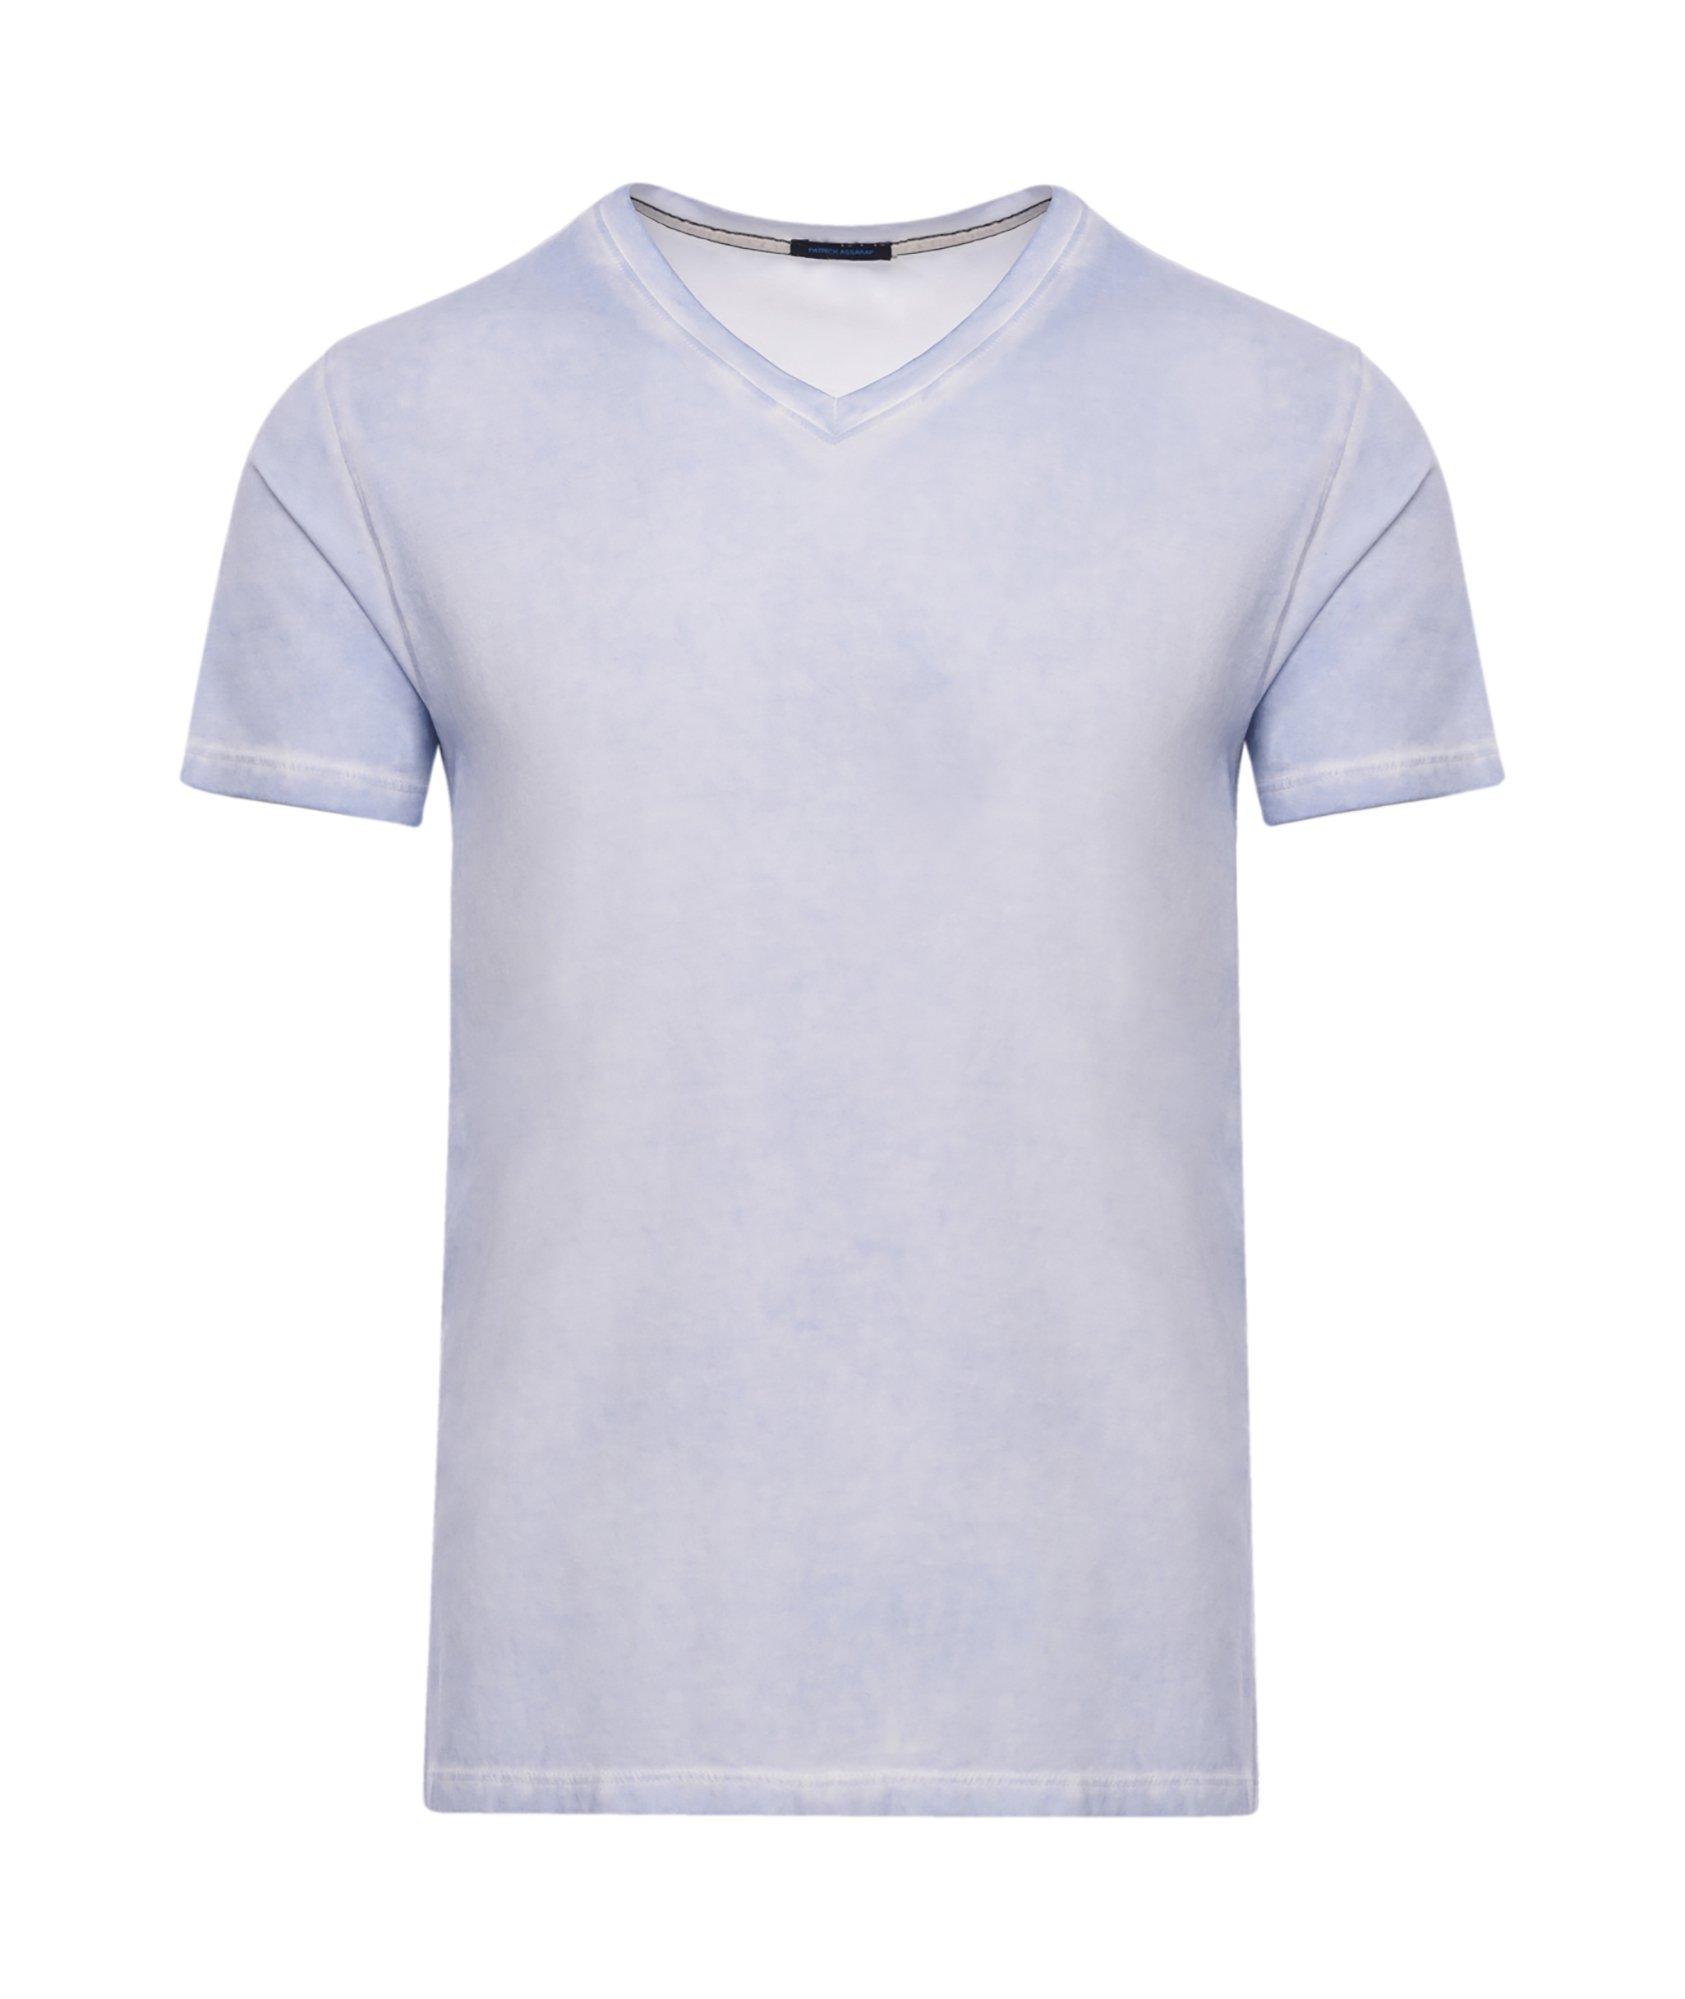 V-Neck Stretch Cotton T-Shirt image 0